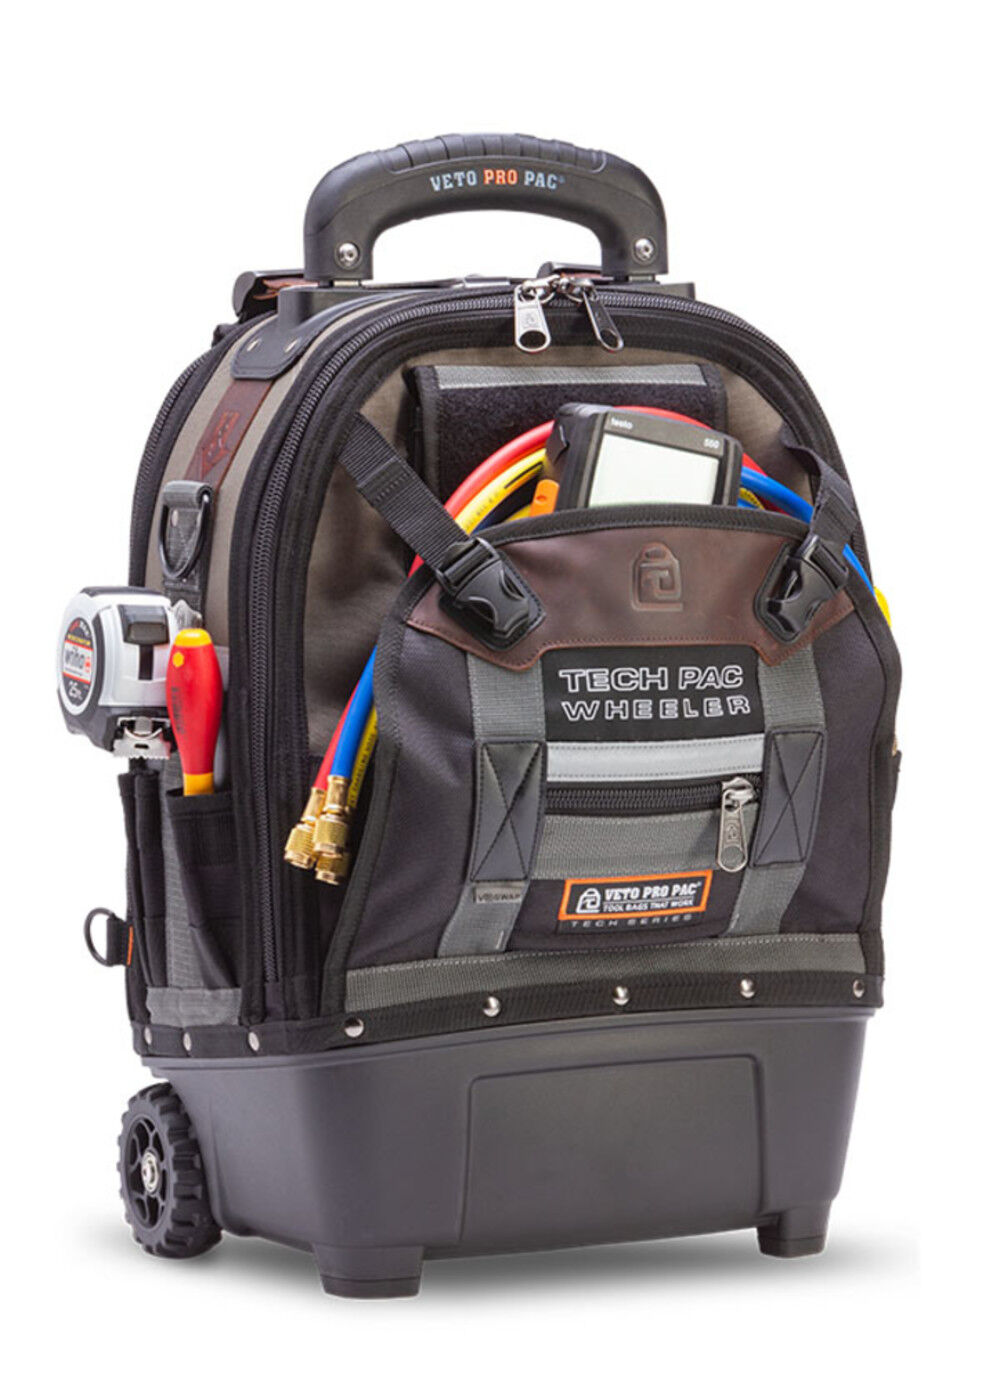 MB3B Meter Bag for Multiple Meters and Tool Storage - VetoProPac